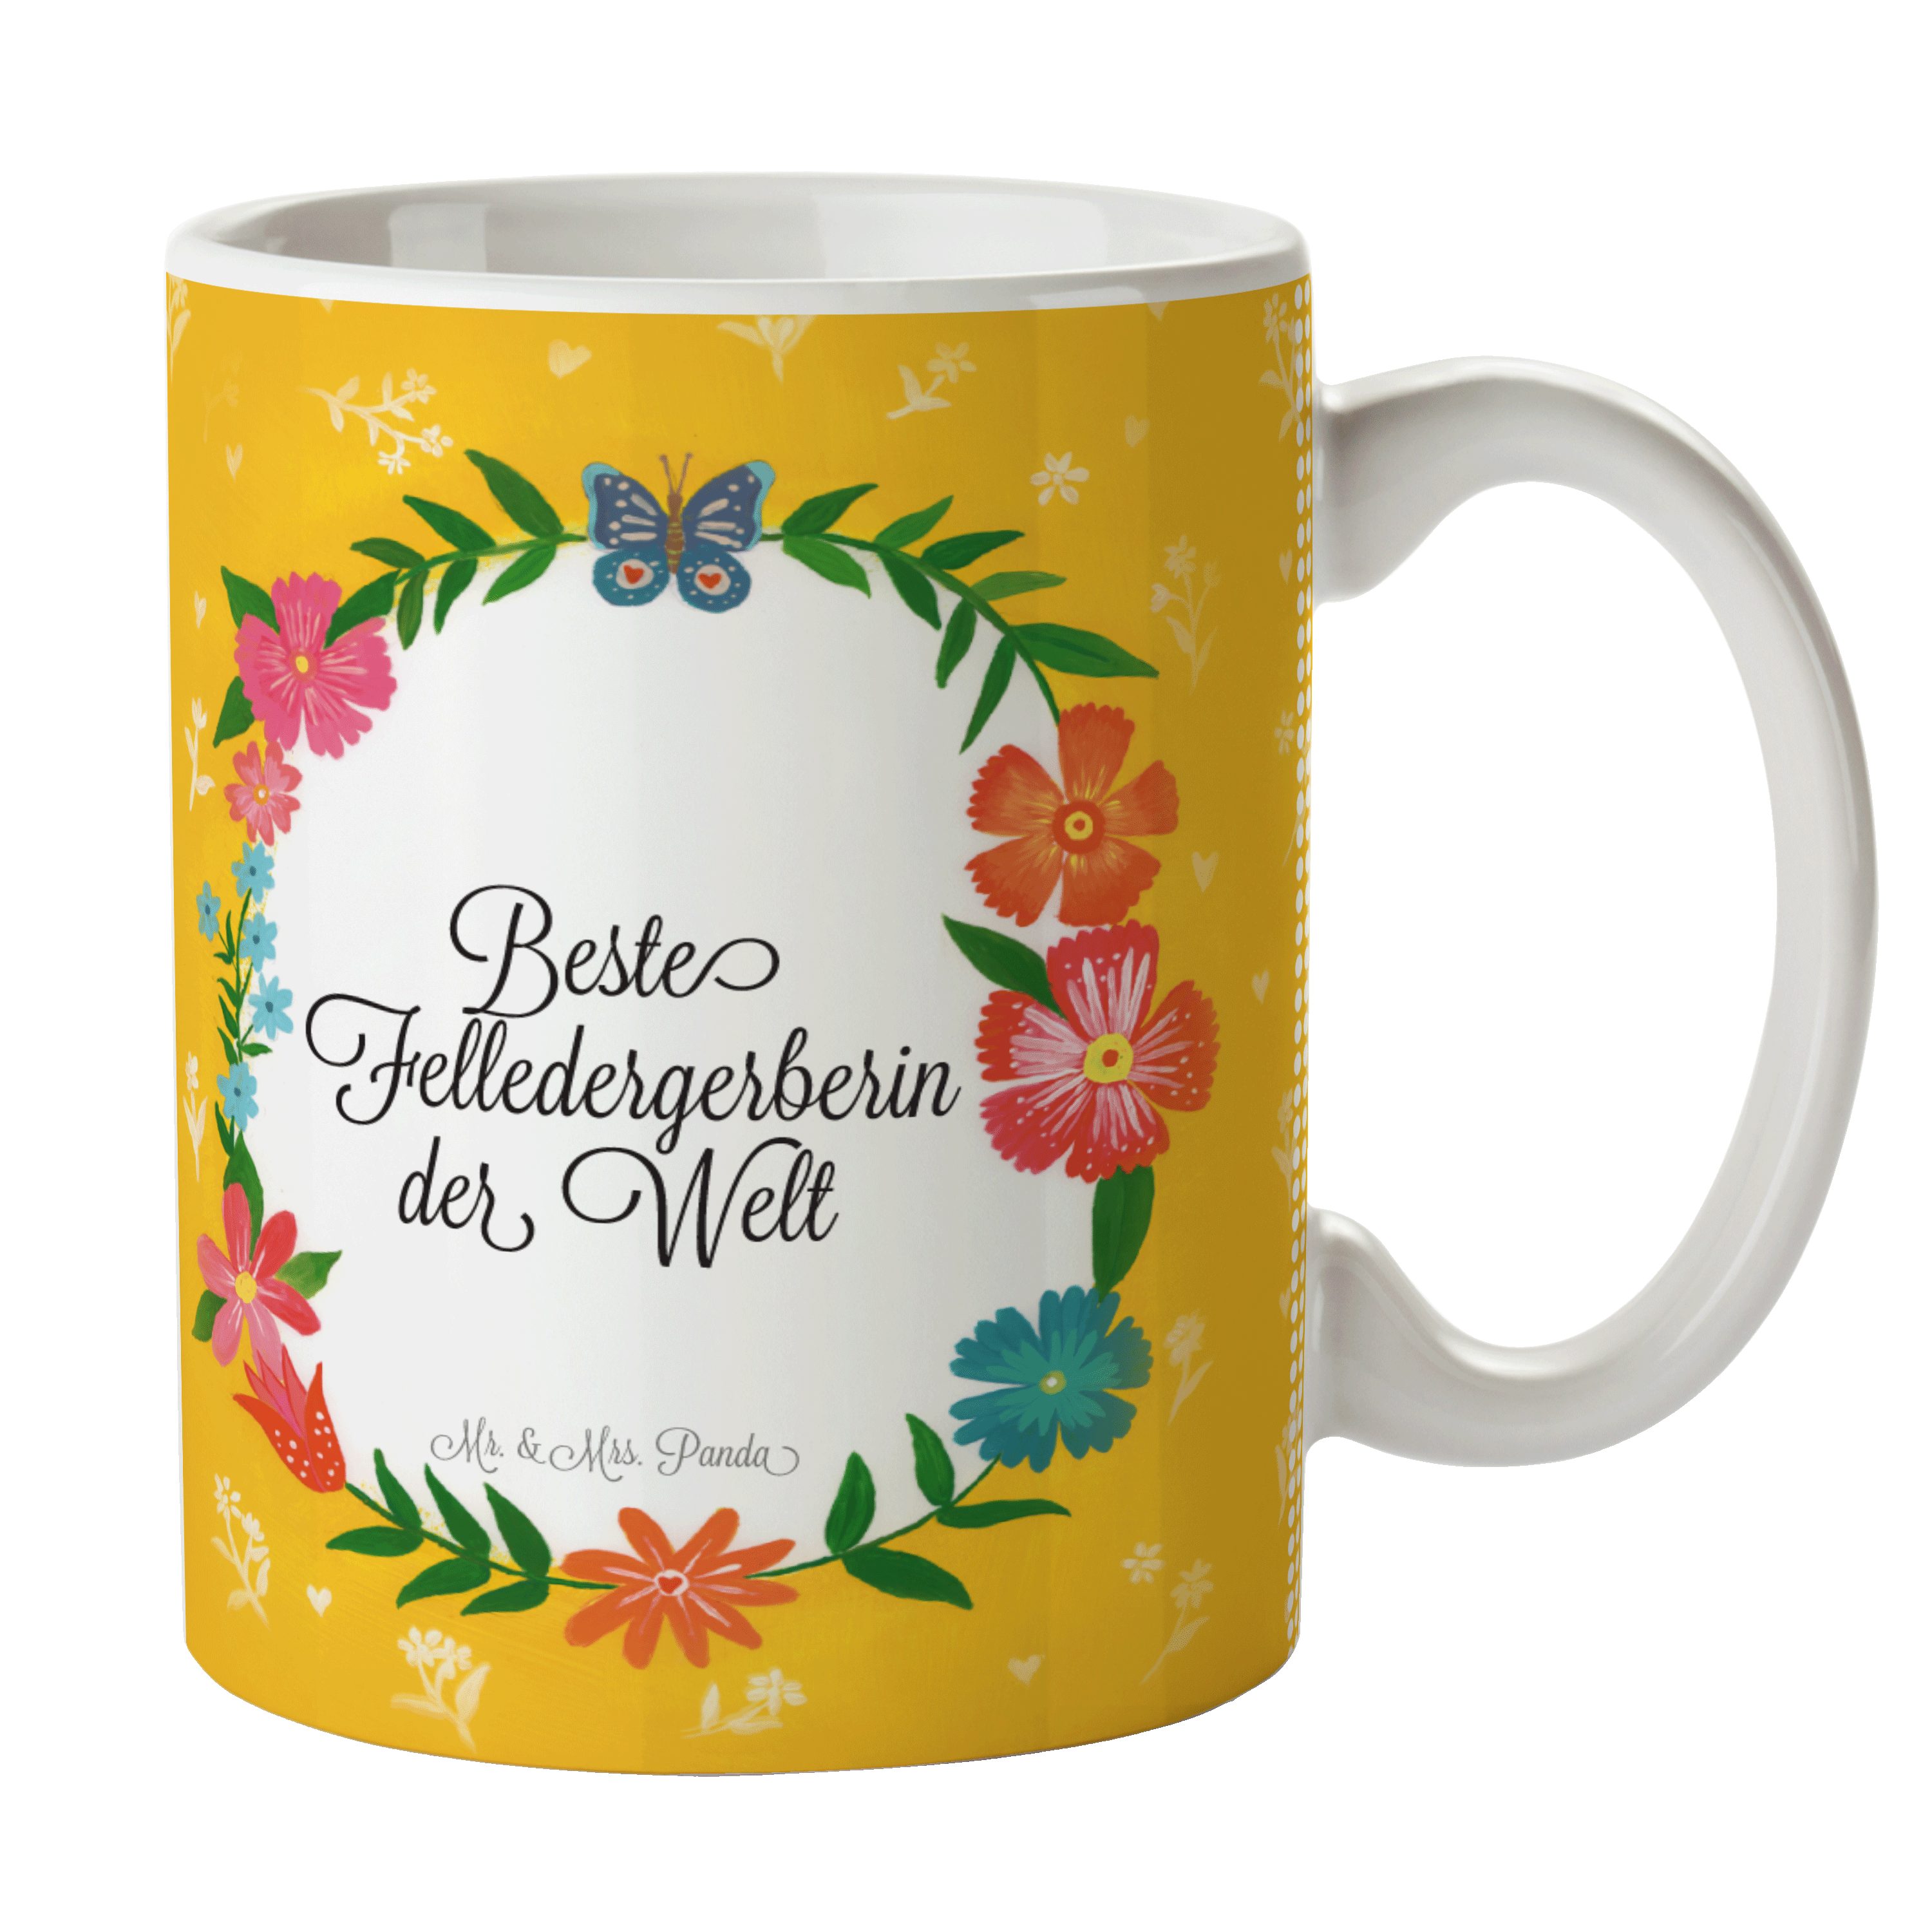 Mr. & Mrs. Panda Tasse Felledergerberin - Geschenk, Kaffeebecher, Büro Tasse, Tasse Sprüche, Keramik